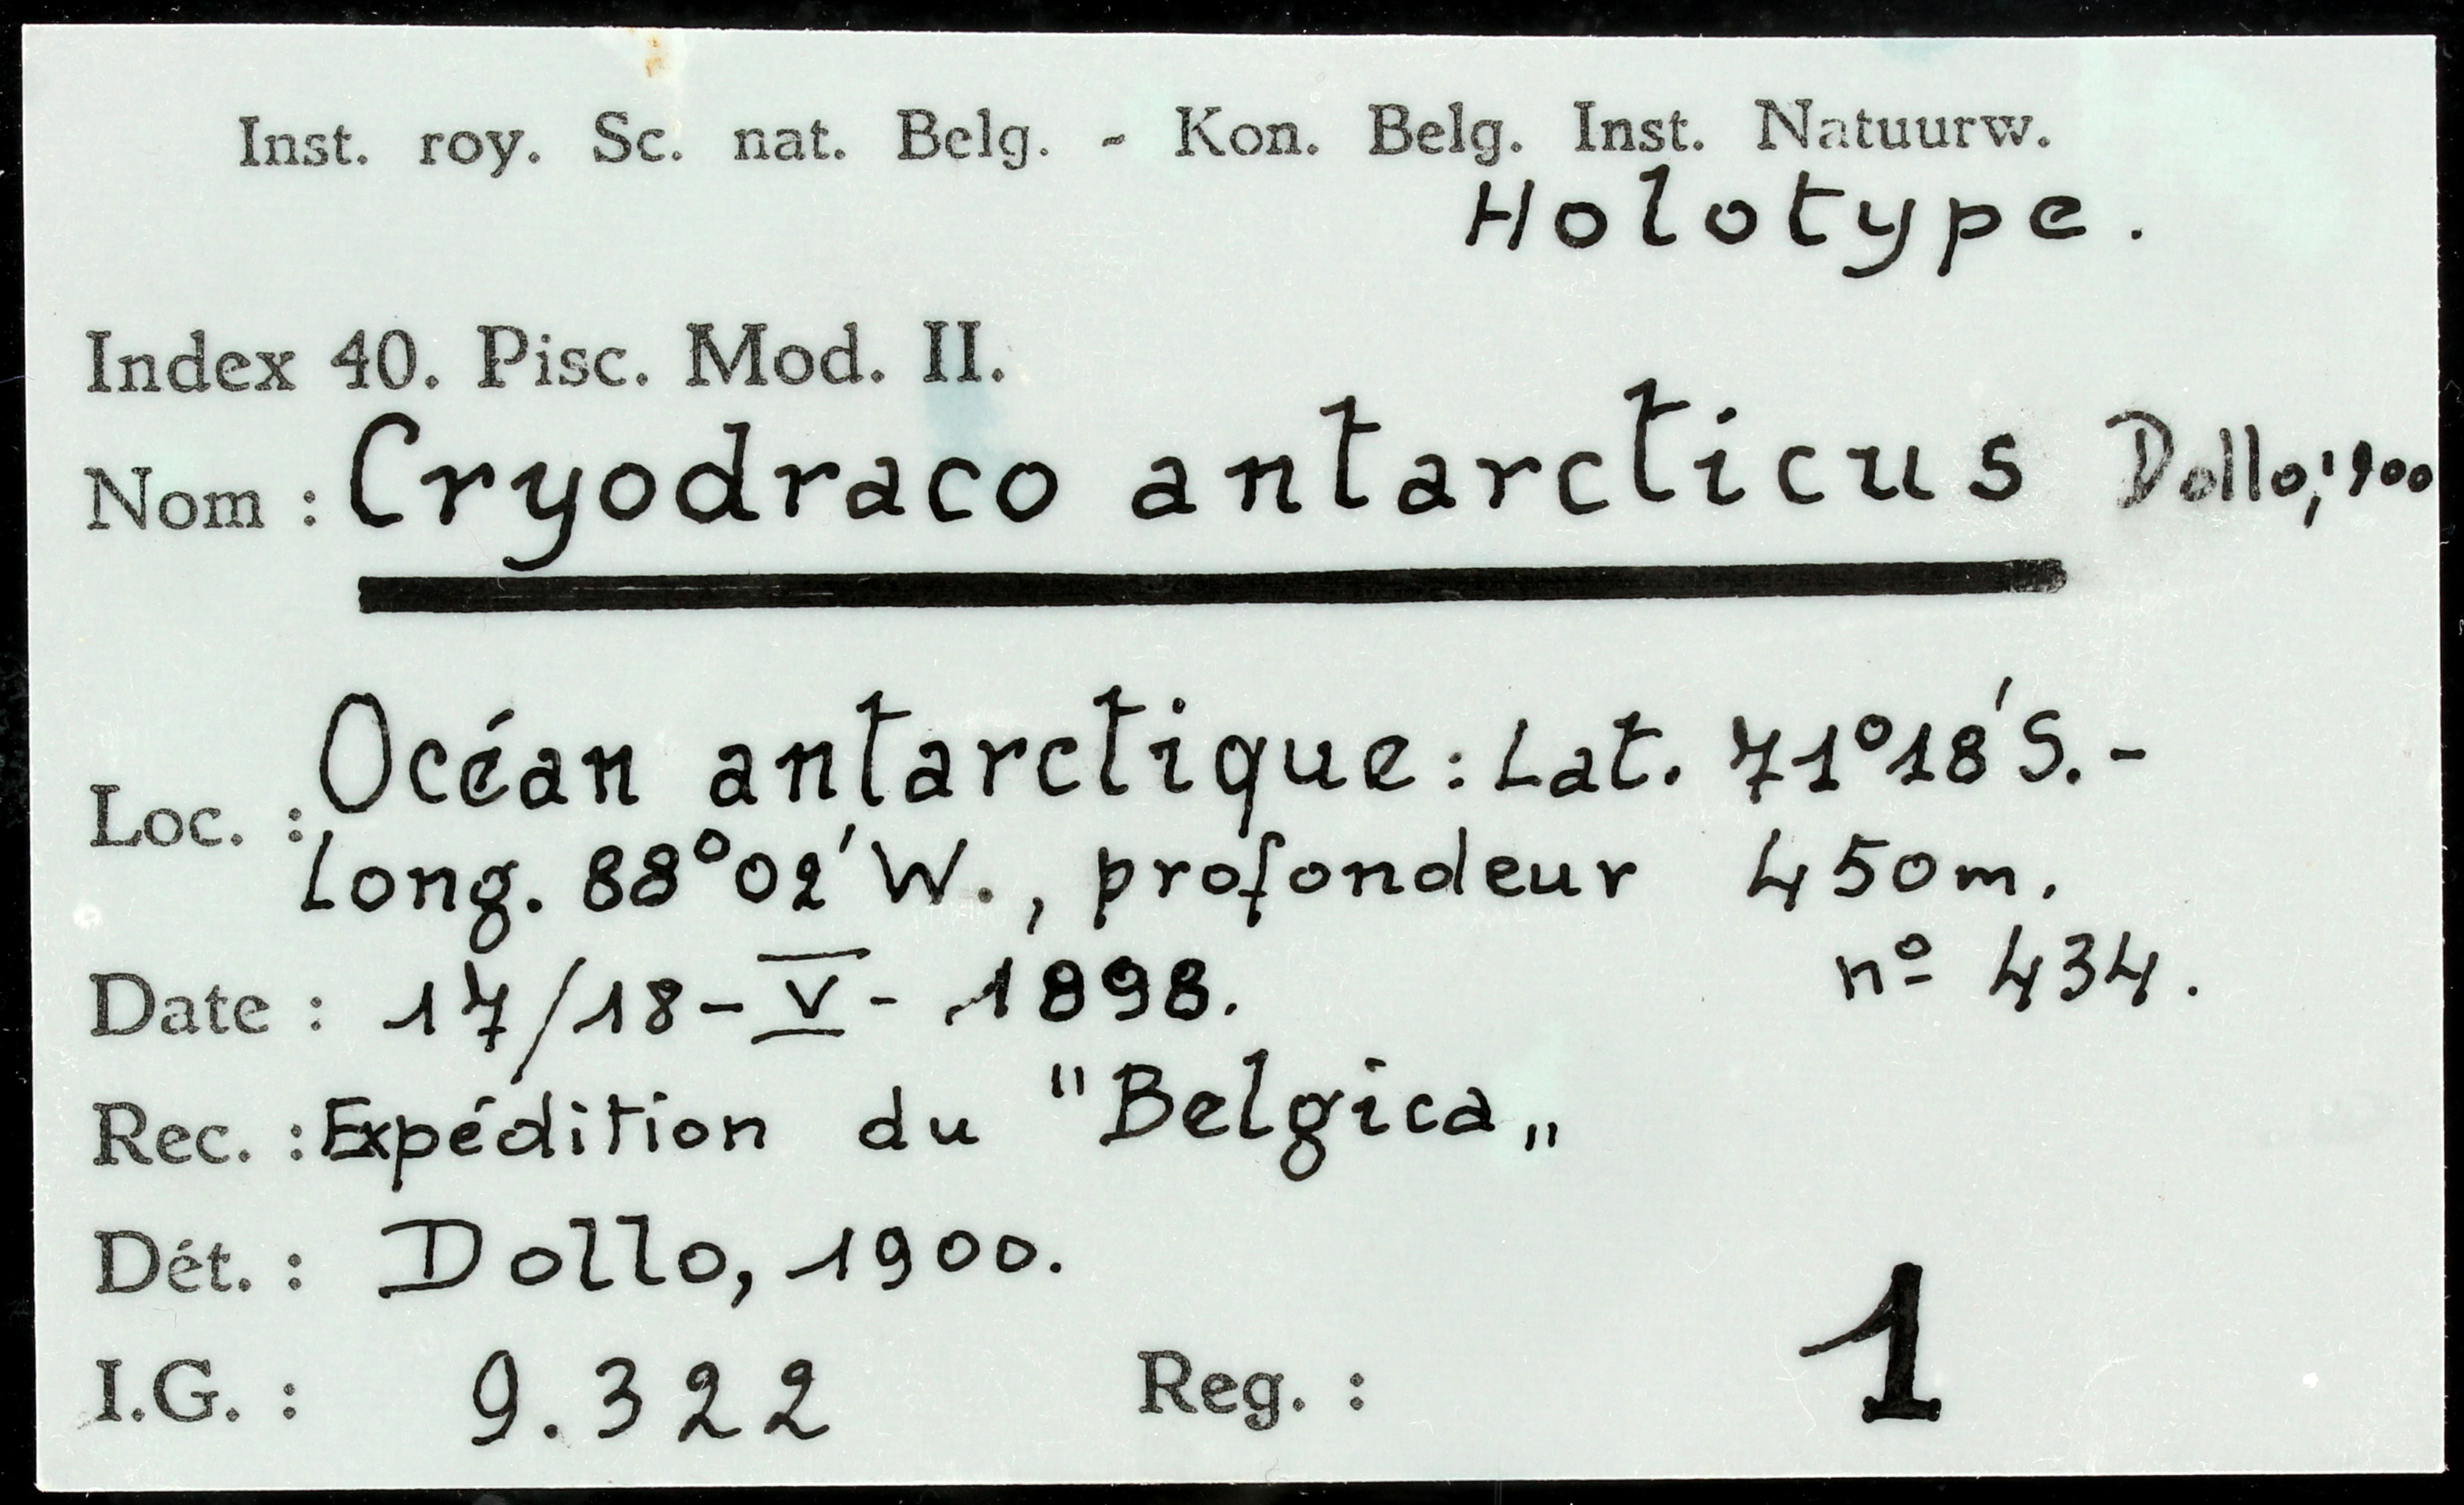 1 Cryodraco antarcticus 9322 ticket.JPG